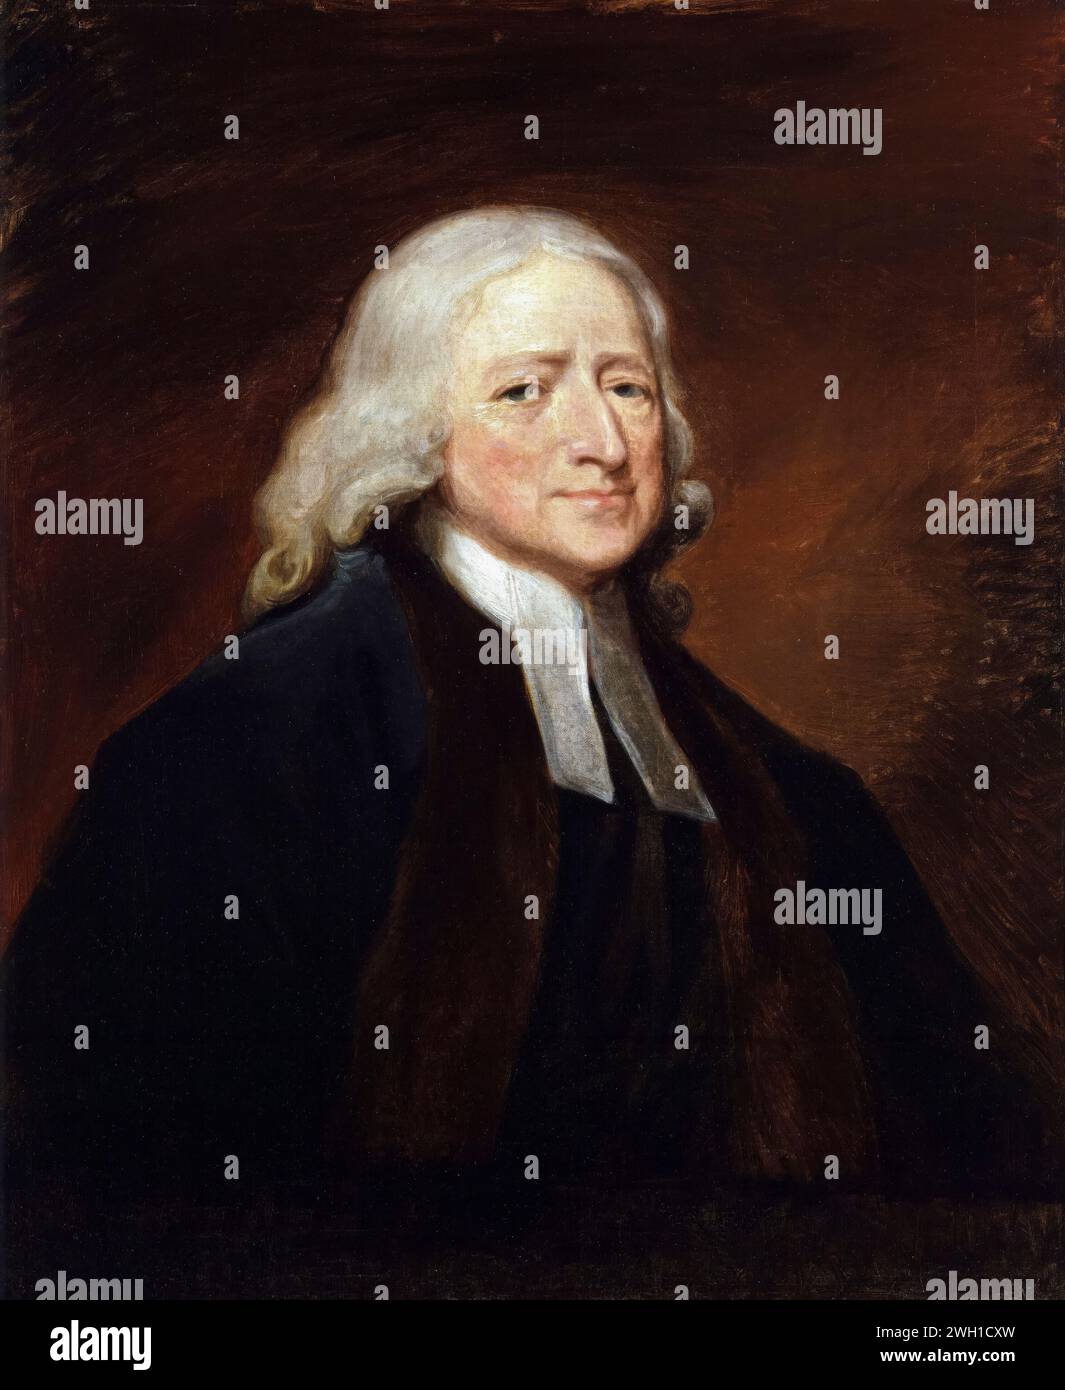 John Wesley (1703-1791), chierico inglese, teologo ed evangelista, leader metodista, ritratto a olio su tela dopo George Romney, circa 1789 Foto Stock